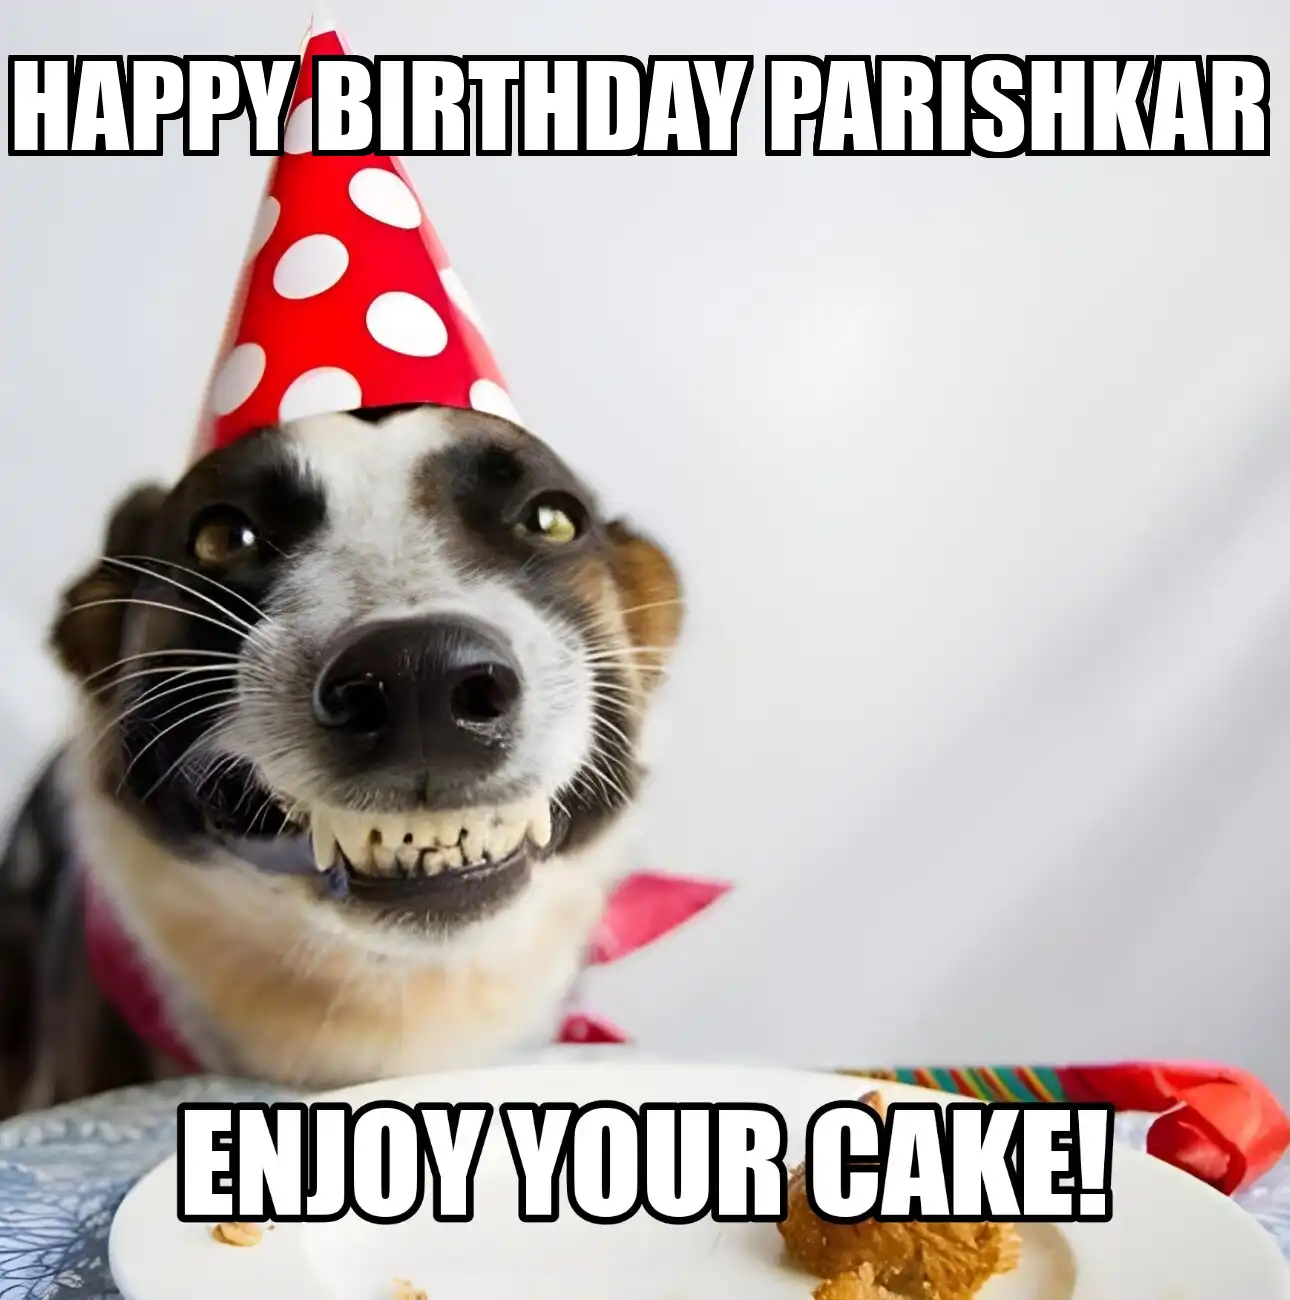 Happy Birthday Parishkar Enjoy Your Cake Dog Meme